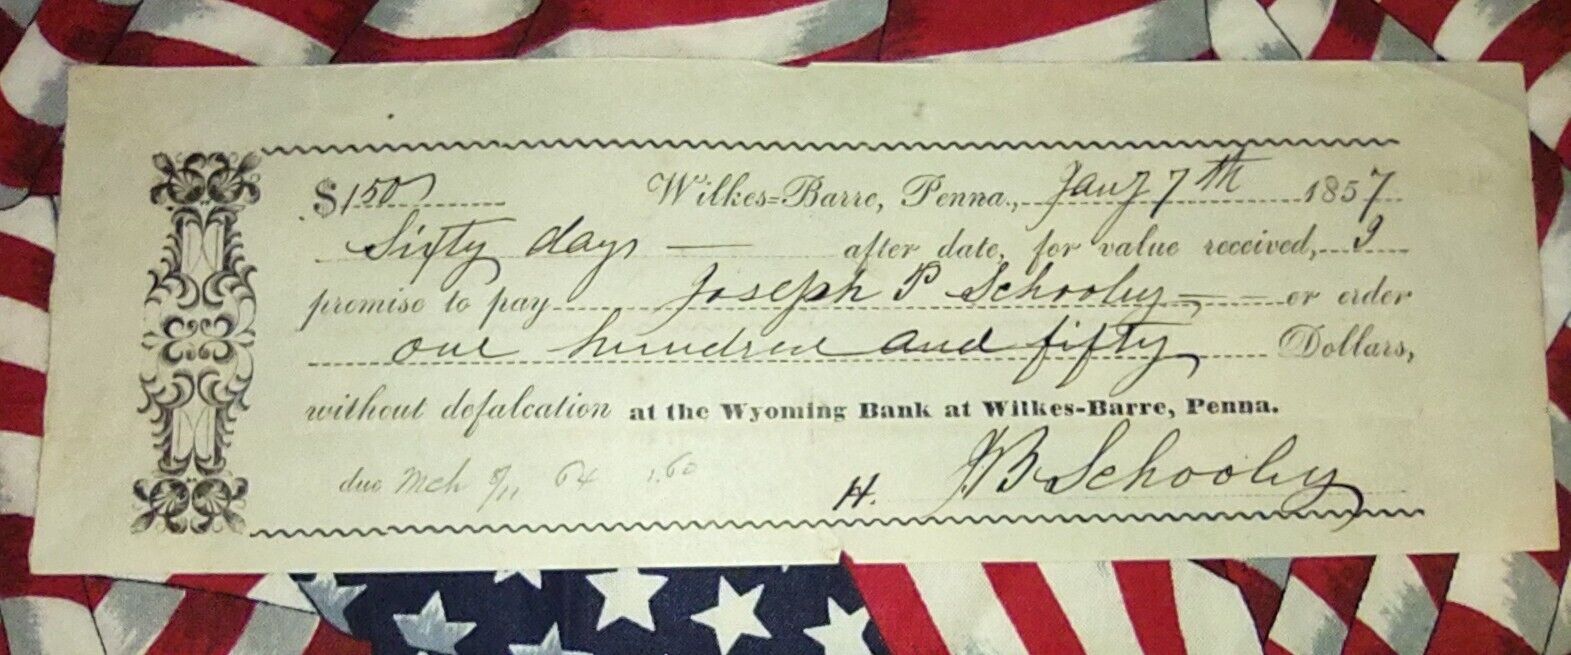 RARE 1857 WILKES-BARRE PENNSYLVANIA WYOMING BANK DOCUMENT.  SIG JOSEPH P SCHOOLY